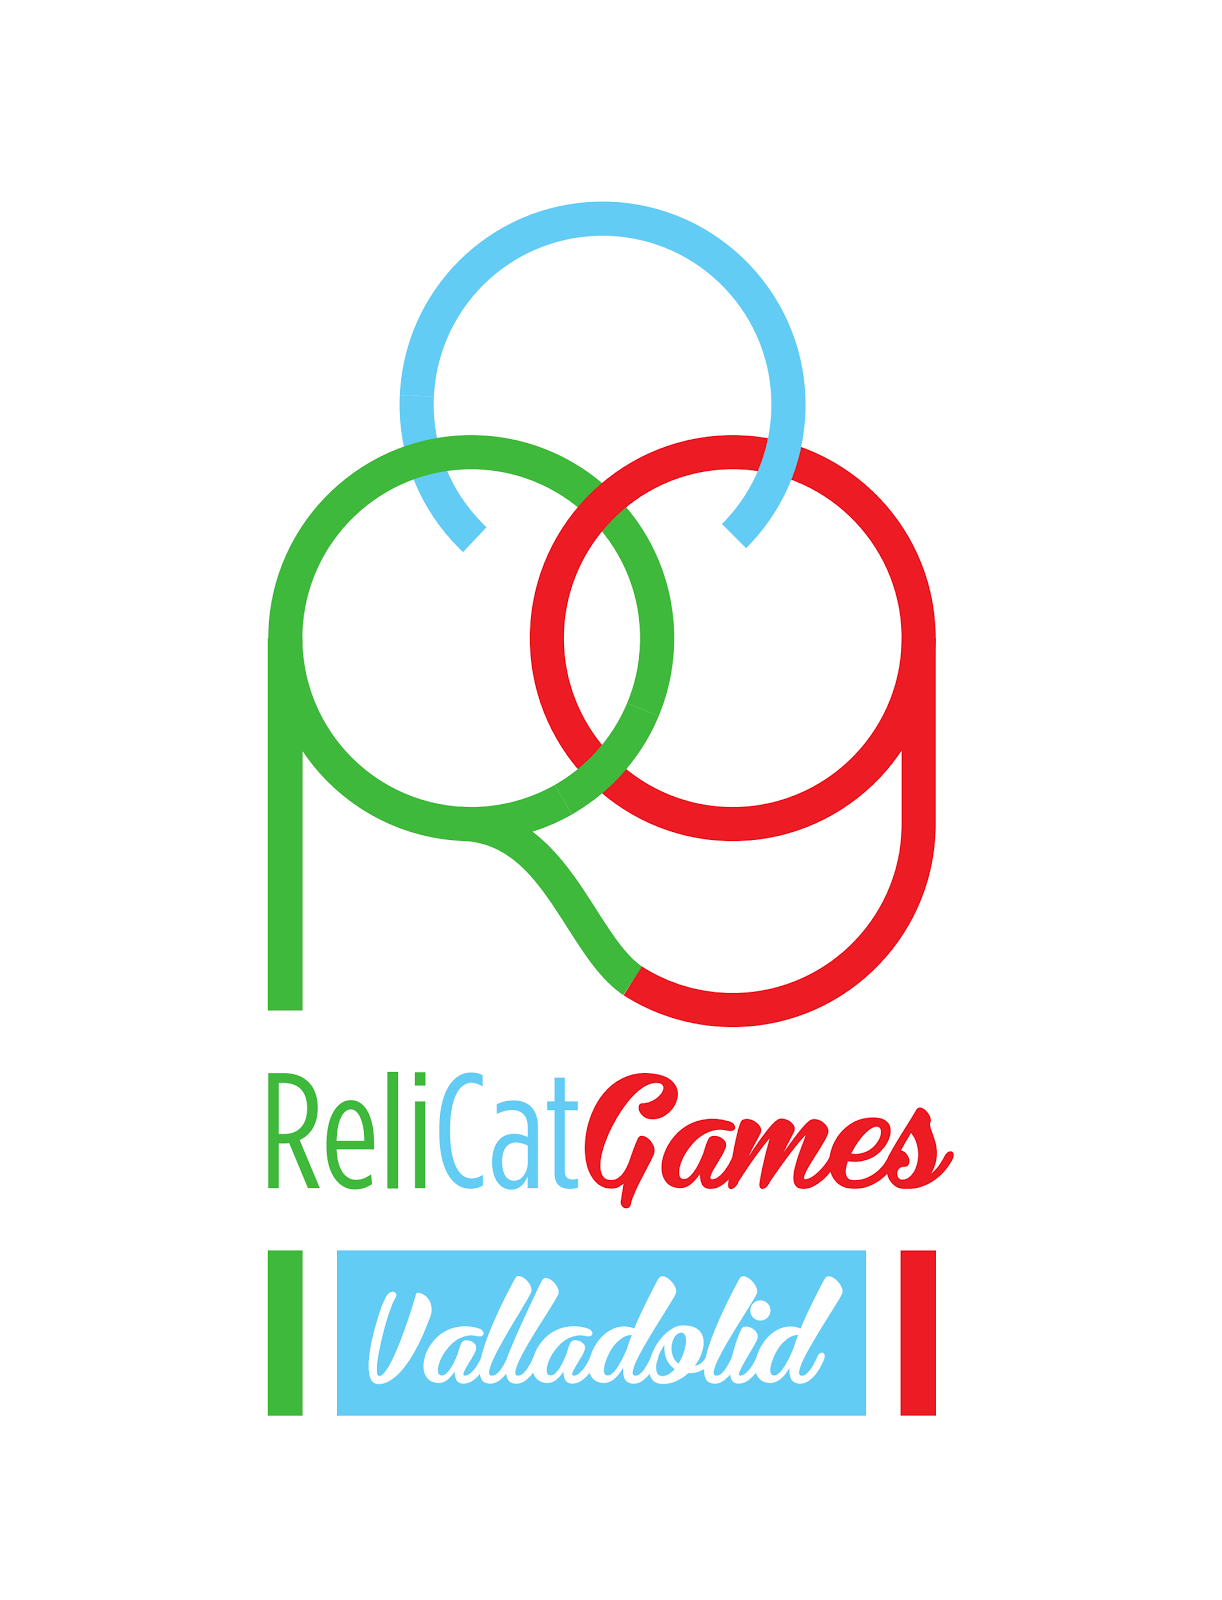 ReliCat Games Valladolid